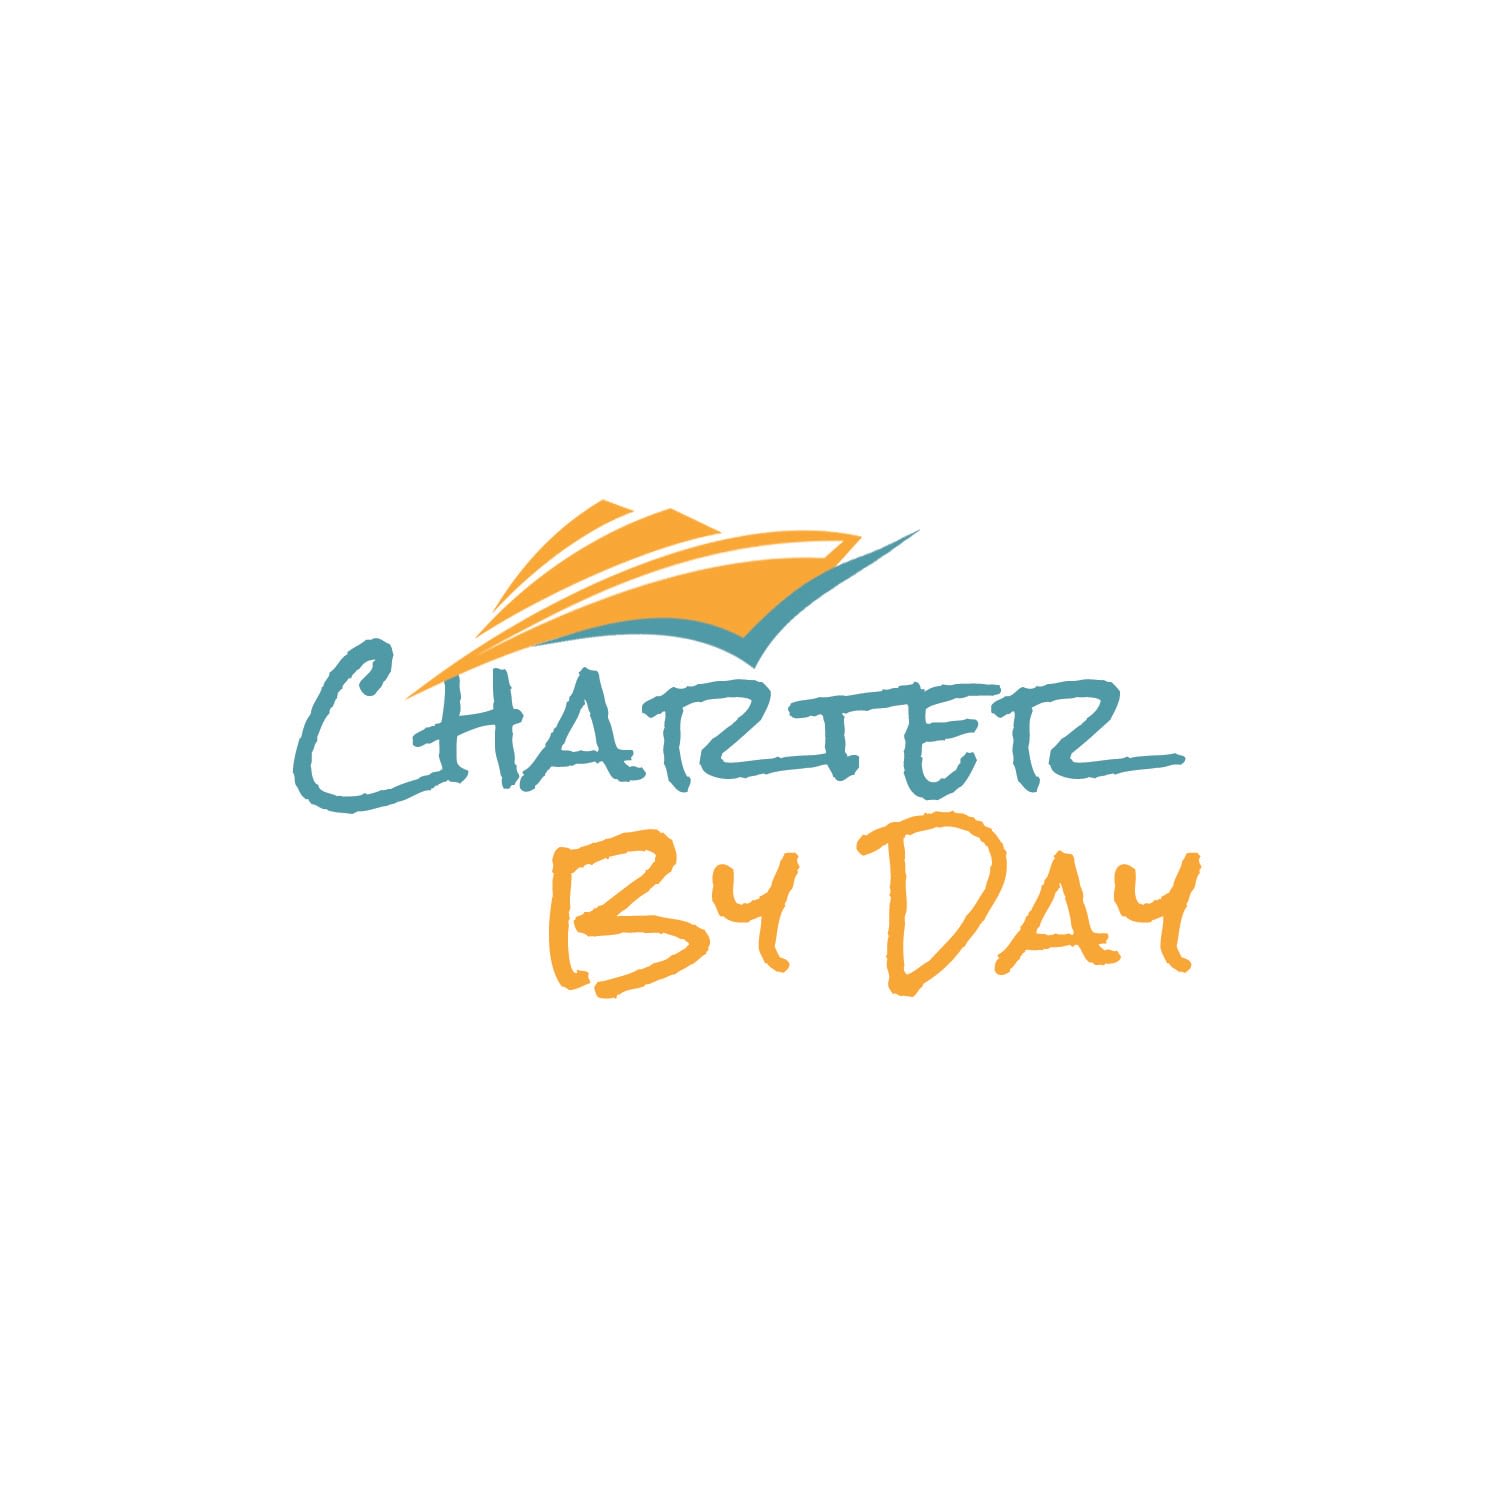 yacht charters chesapeake bay